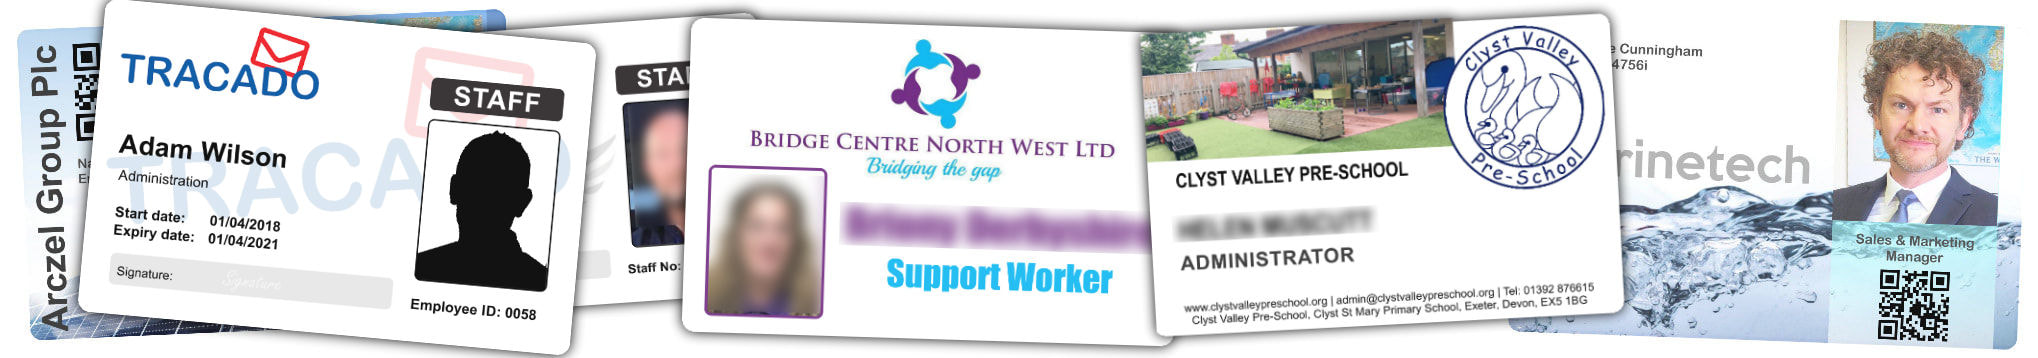 Accrington ID card printing | staff photo ID cards and Badges | company employee ID card print service | Local Identity Card Printing | Custom Design 